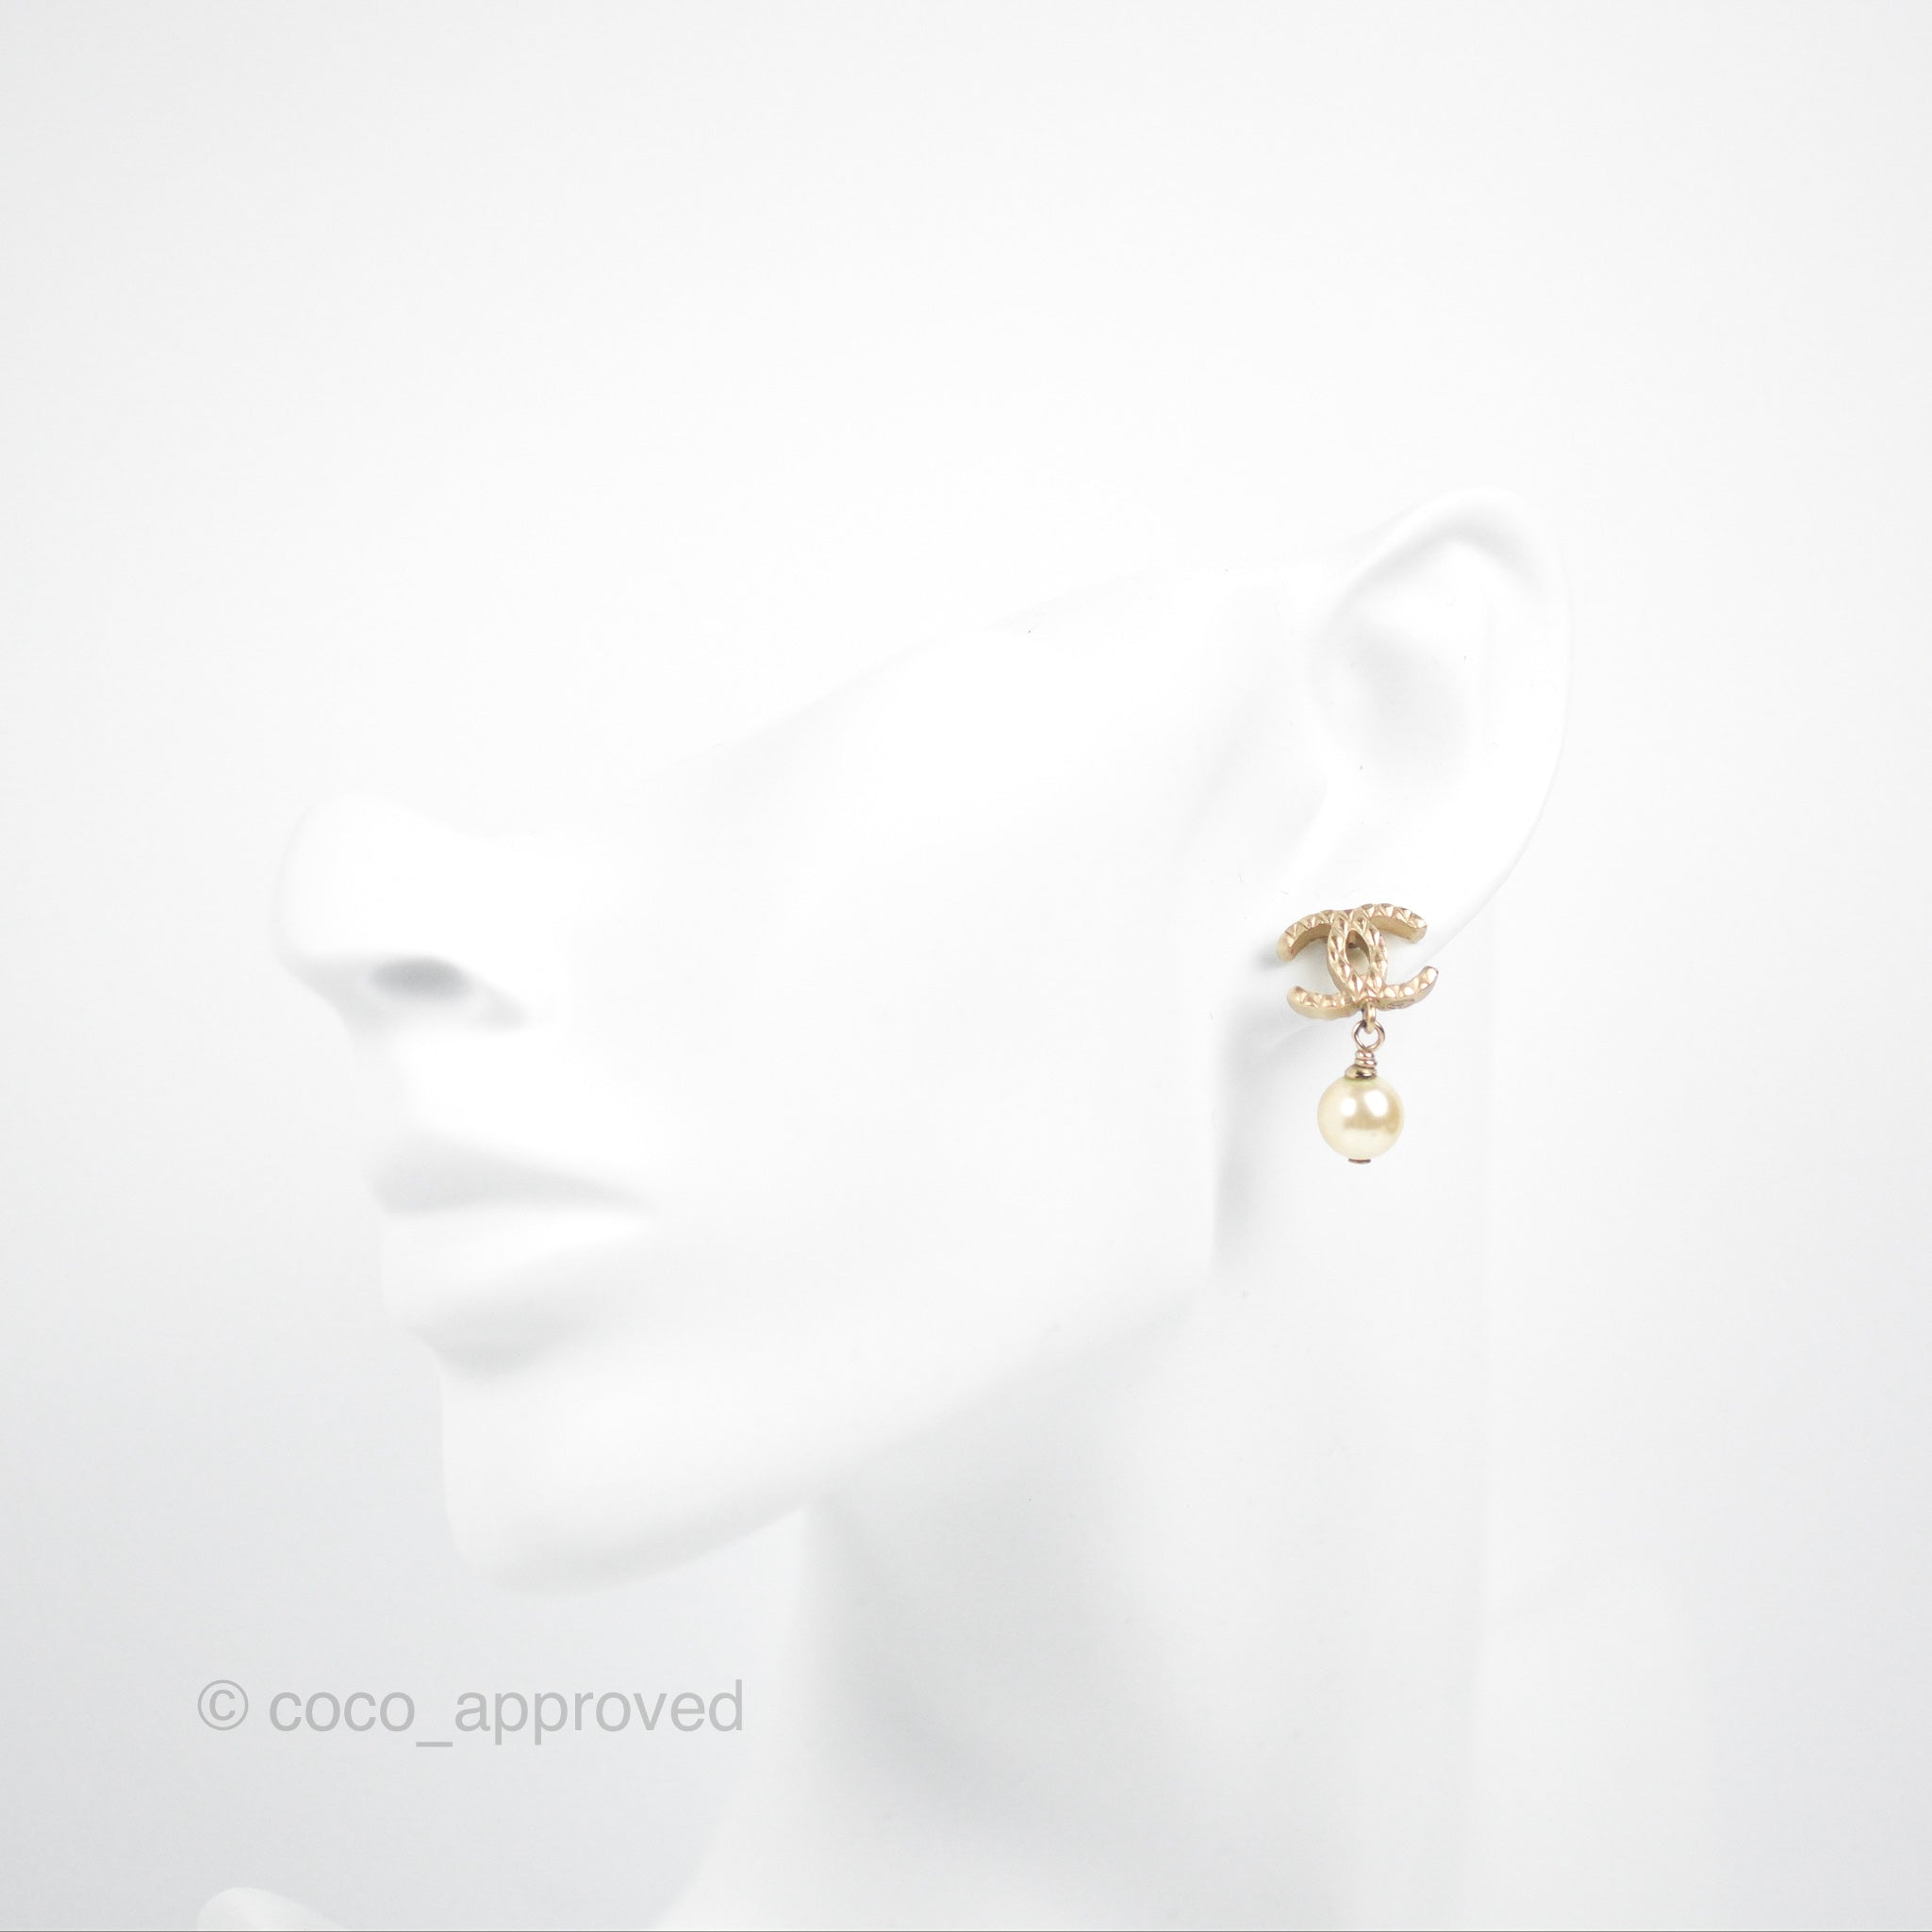 cc coco chanel earrings